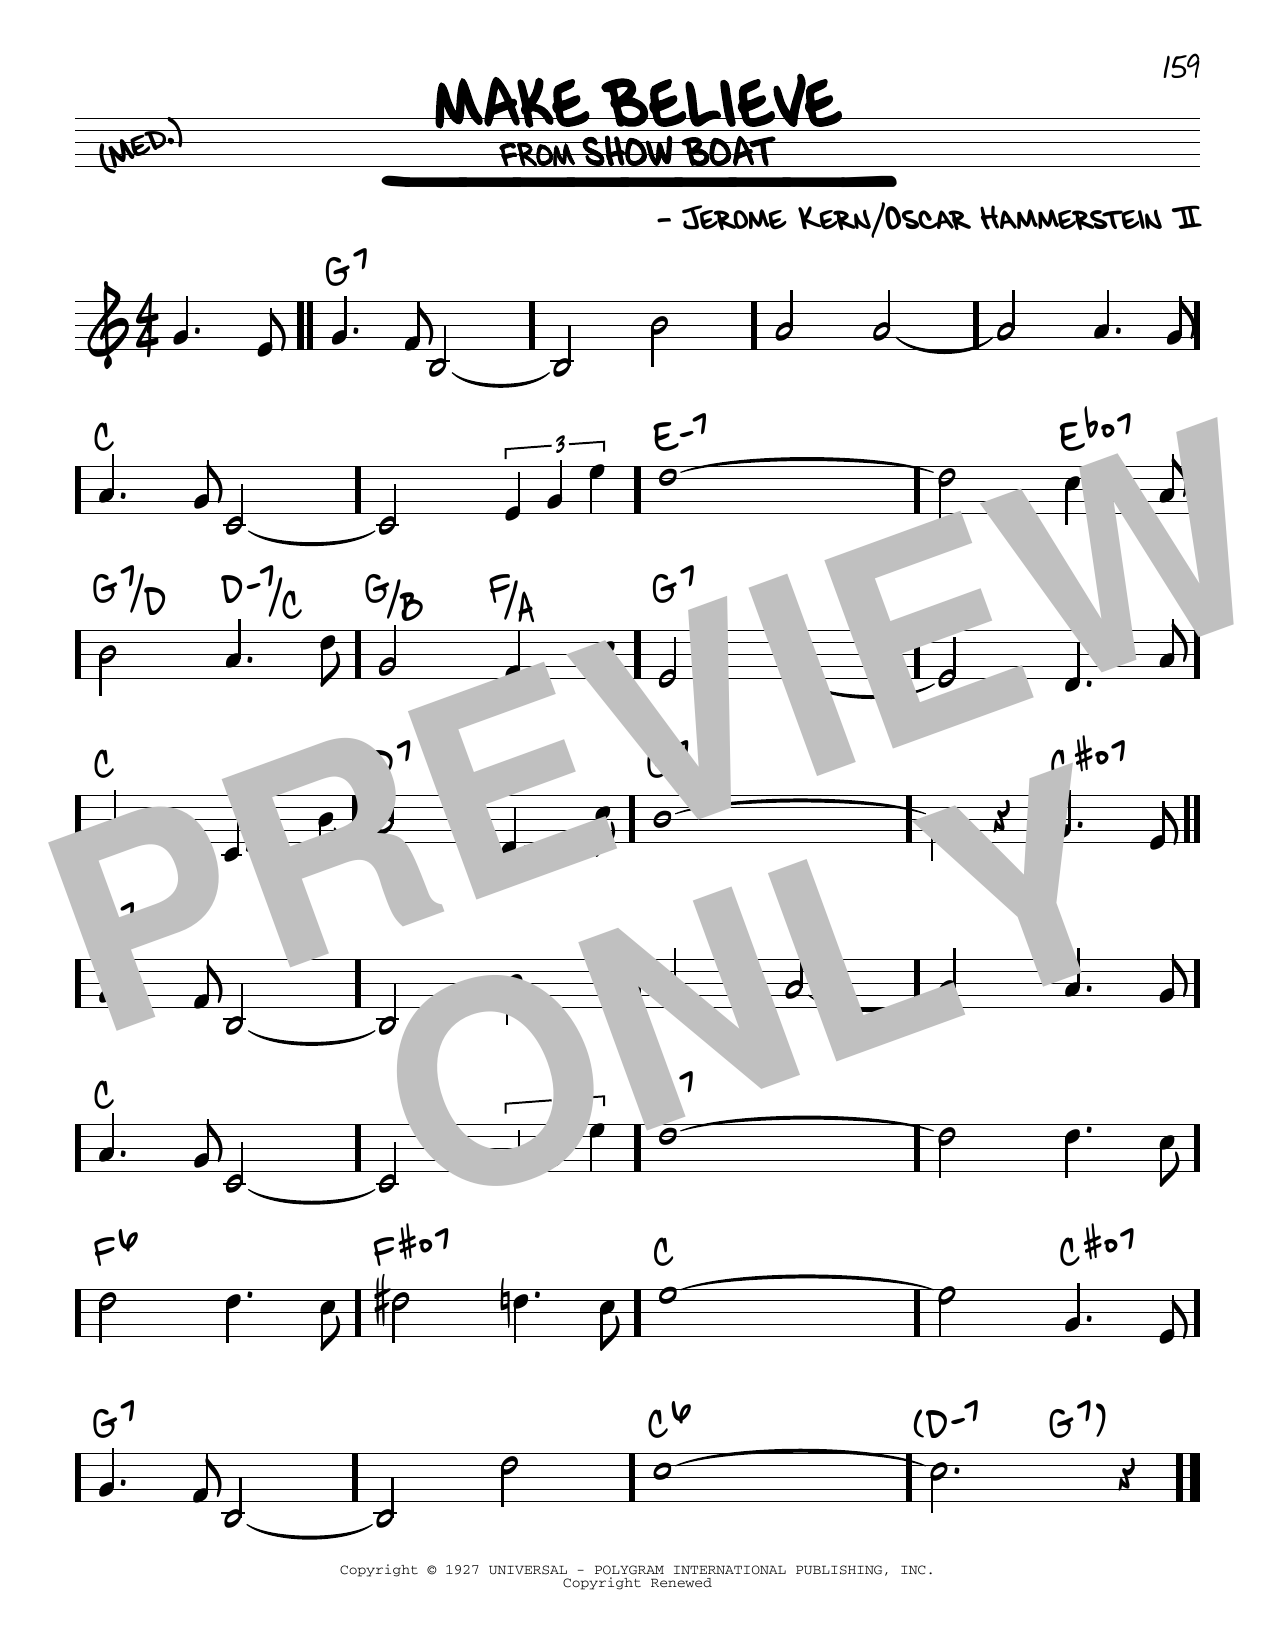 Oscar Hammerstein II Make Believe Sheet Music Notes & Chords for Melody Line, Lyrics & Chords - Download or Print PDF